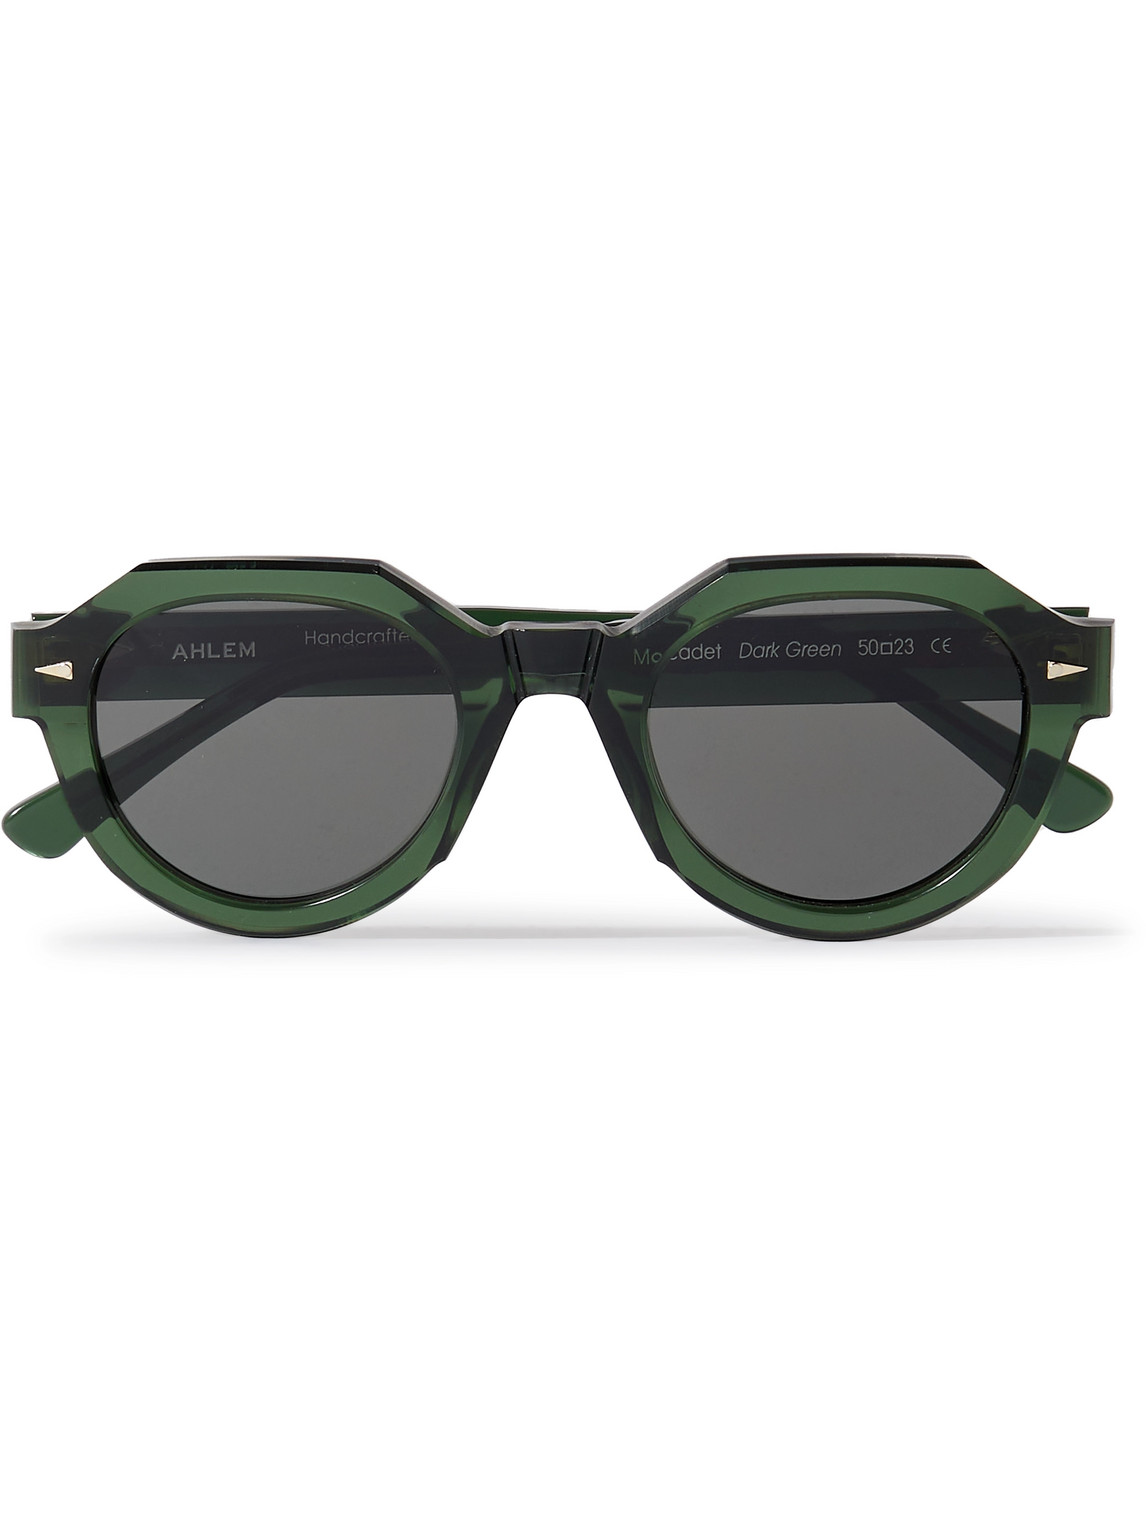 Marcadet Hexagonal-Frame Acetate Sunglasses